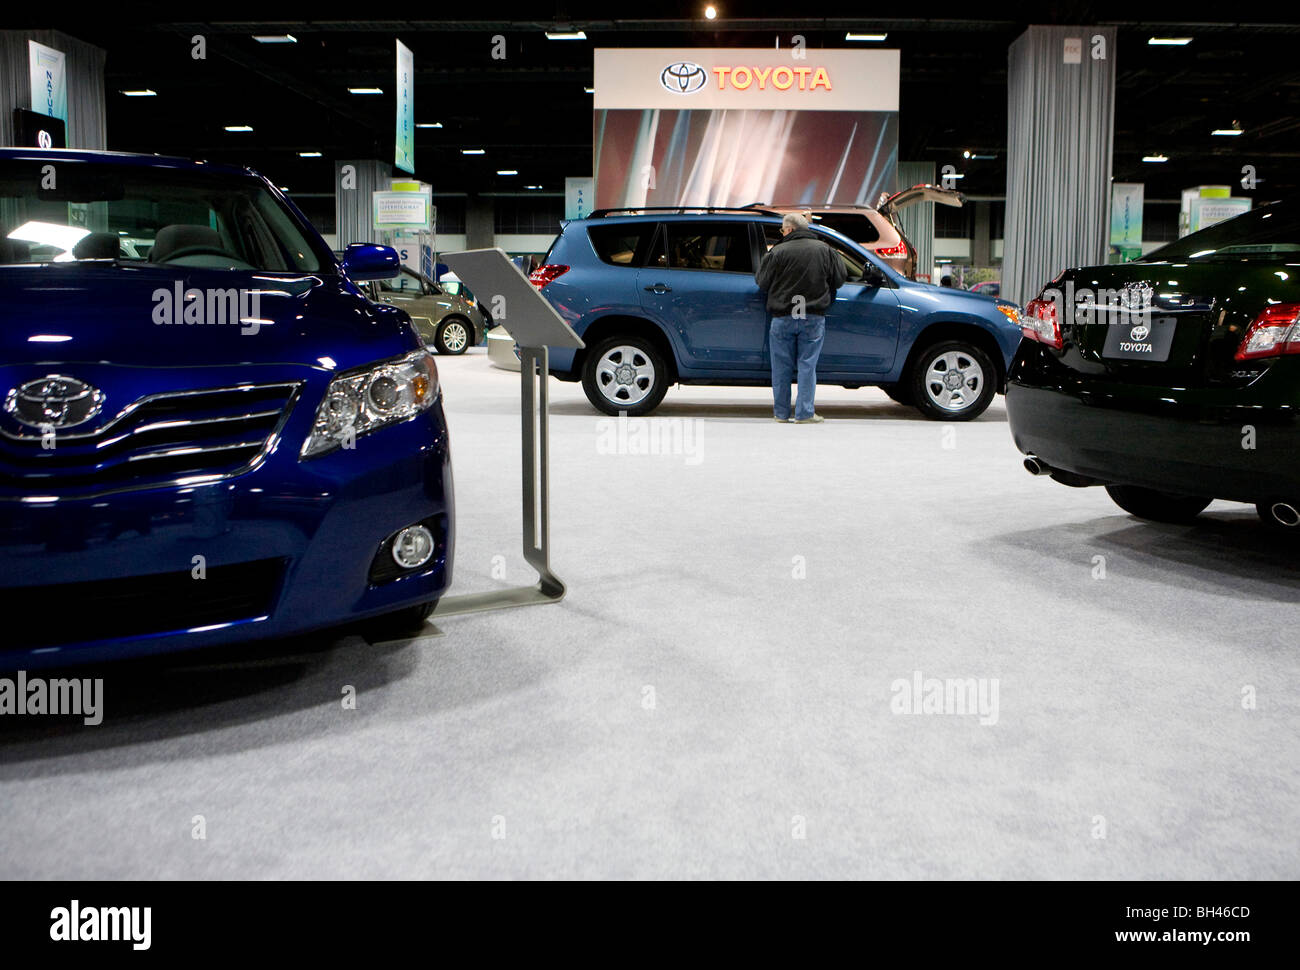 Toyota vehicles on display.  Stock Photo